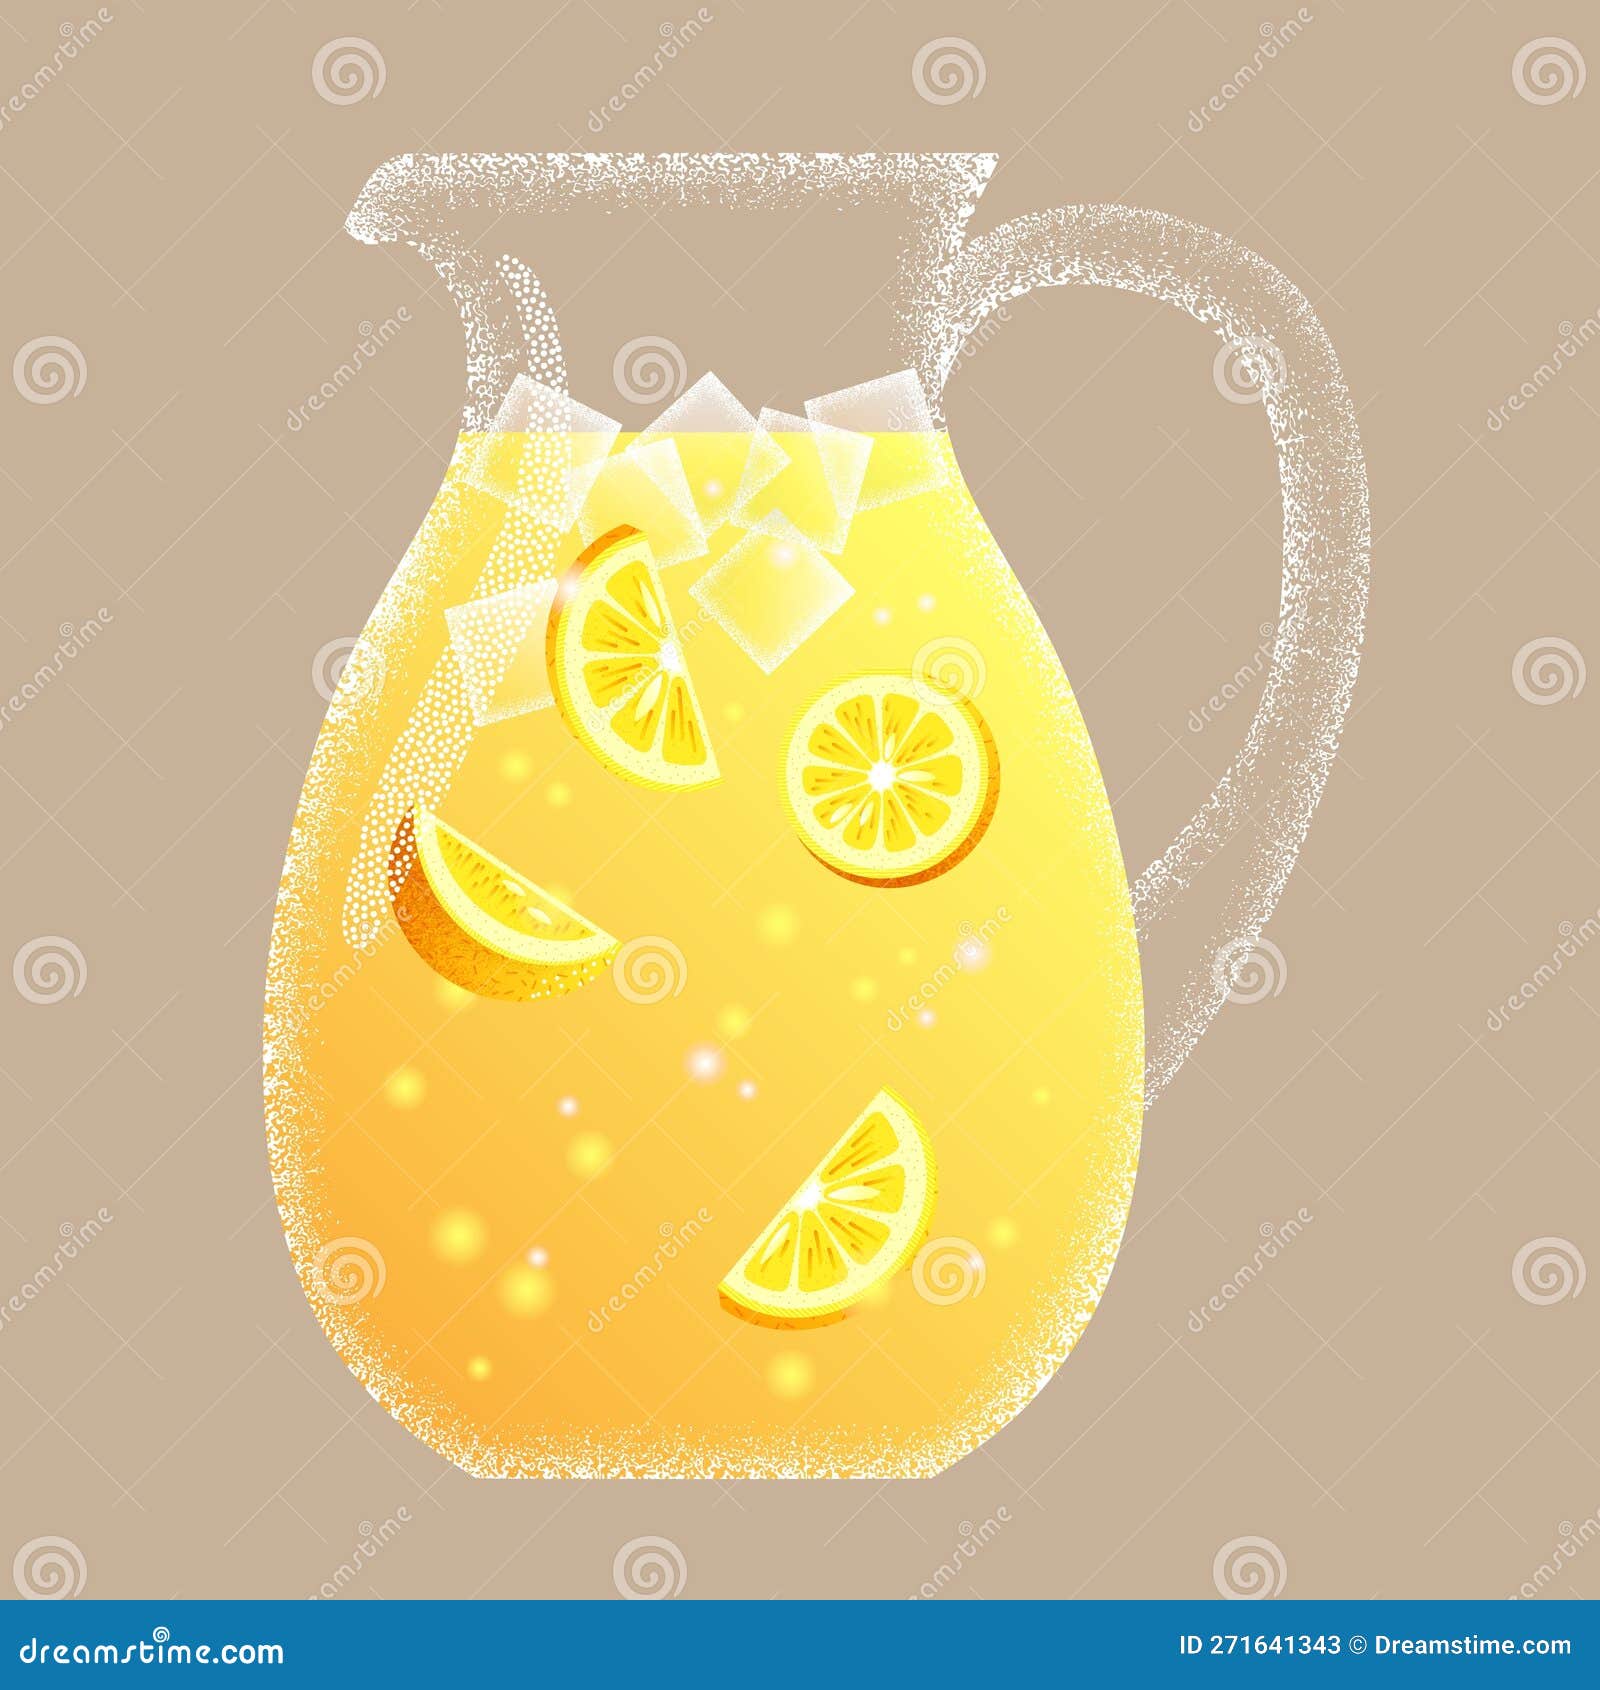 https://thumbs.dreamstime.com/z/jug-lemonade-juice-lemon-drink-glass-jar-yellow-beverage-ice-cubes-orange-slices-half-quarter-modern-texture-gradient-271641343.jpg